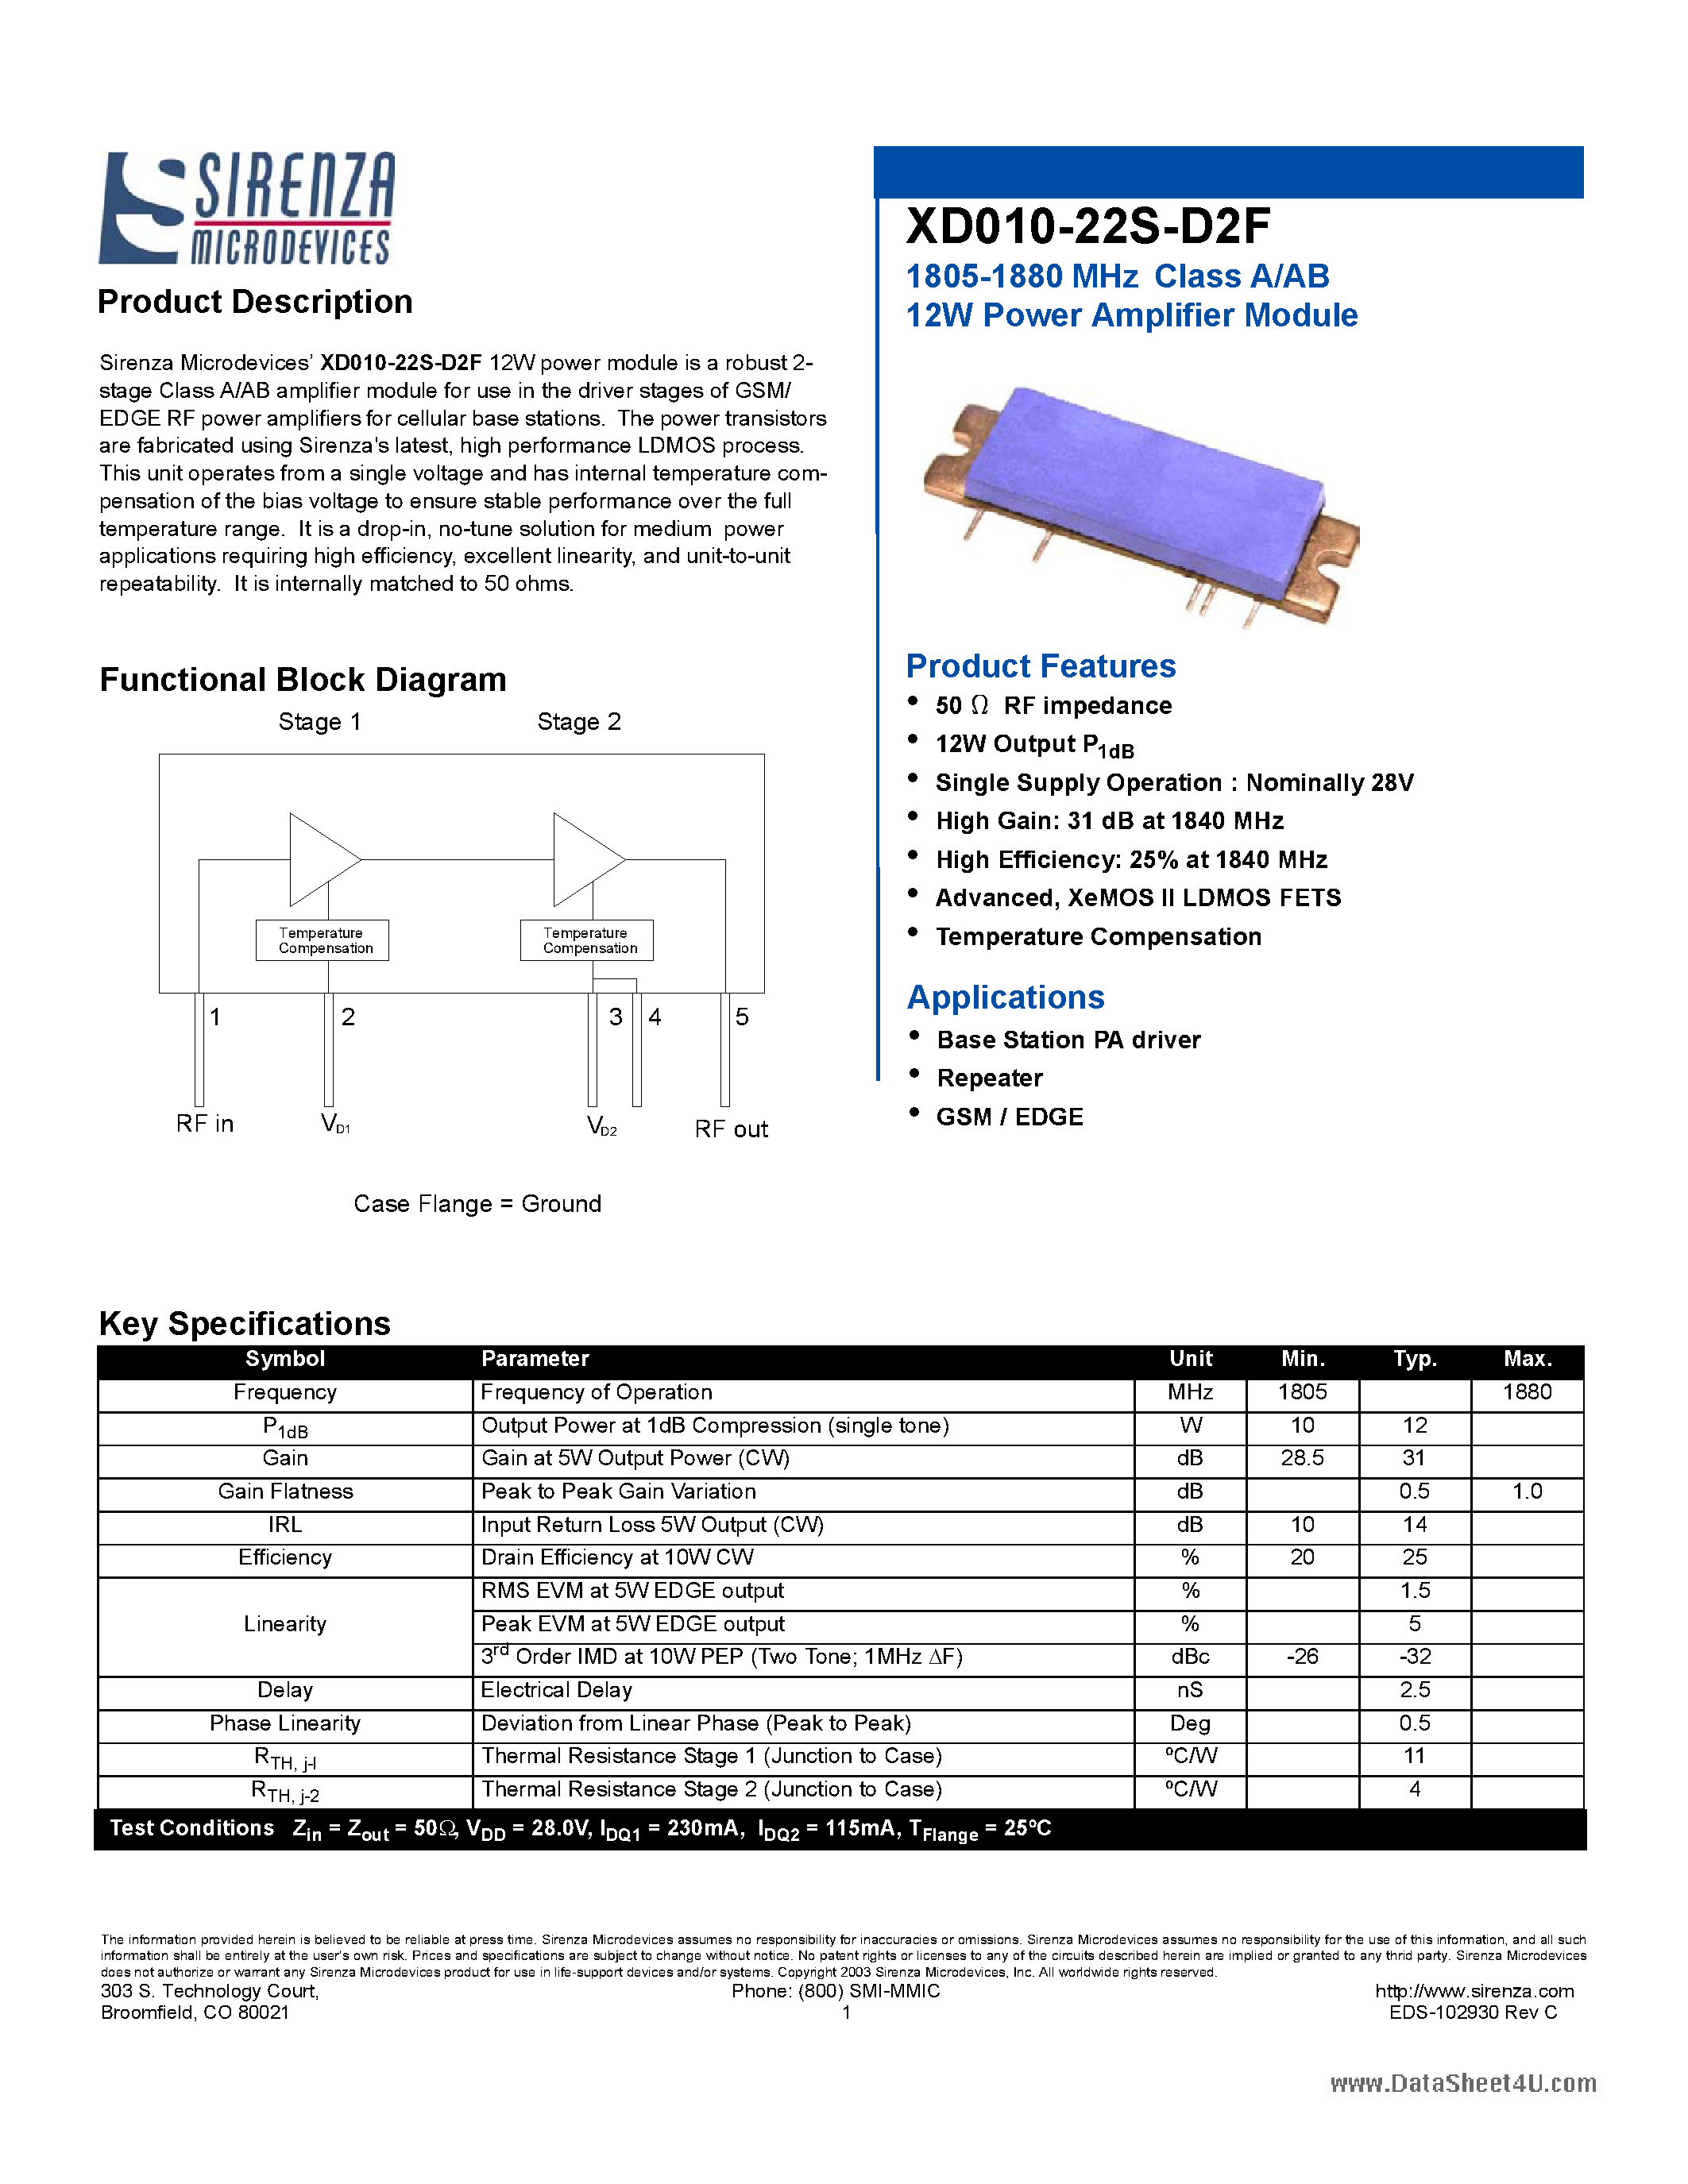 Datasheet XD010-22S-D2F - Class A/AB 12W Power Amplifier Module page 1